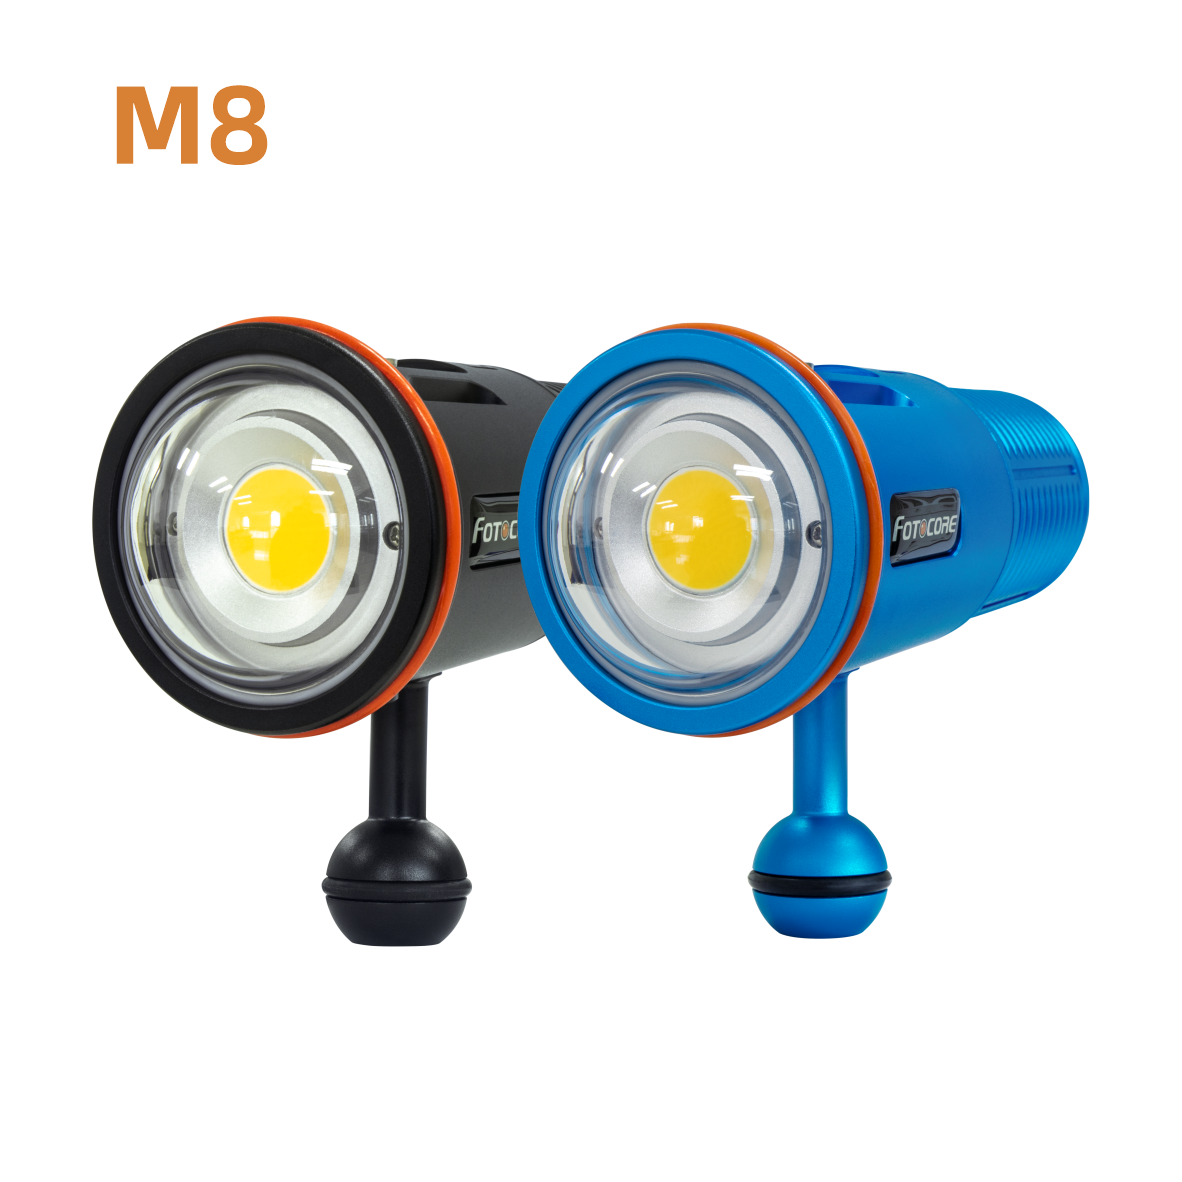 Video Light M8 - 8,000 Lumens